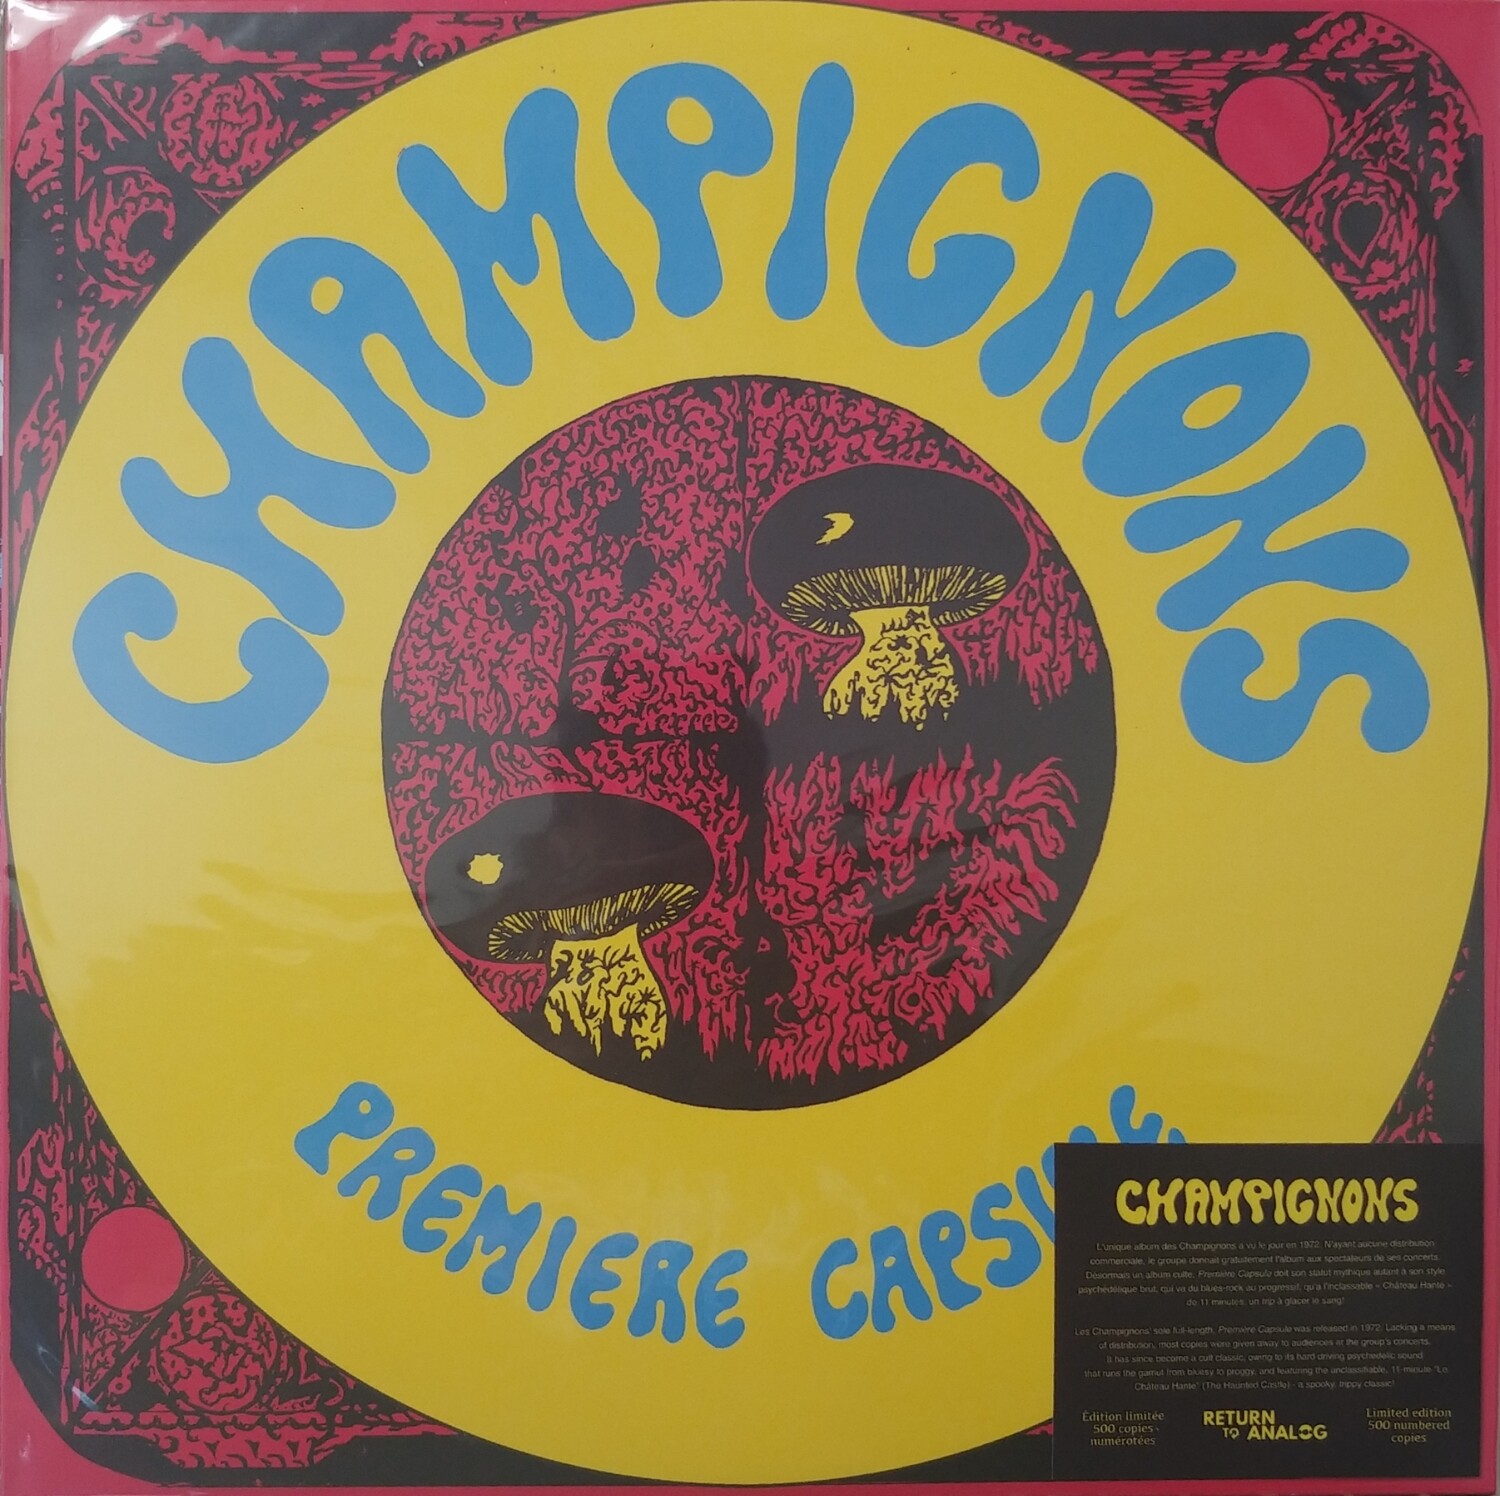 Champignons - Première Capsule